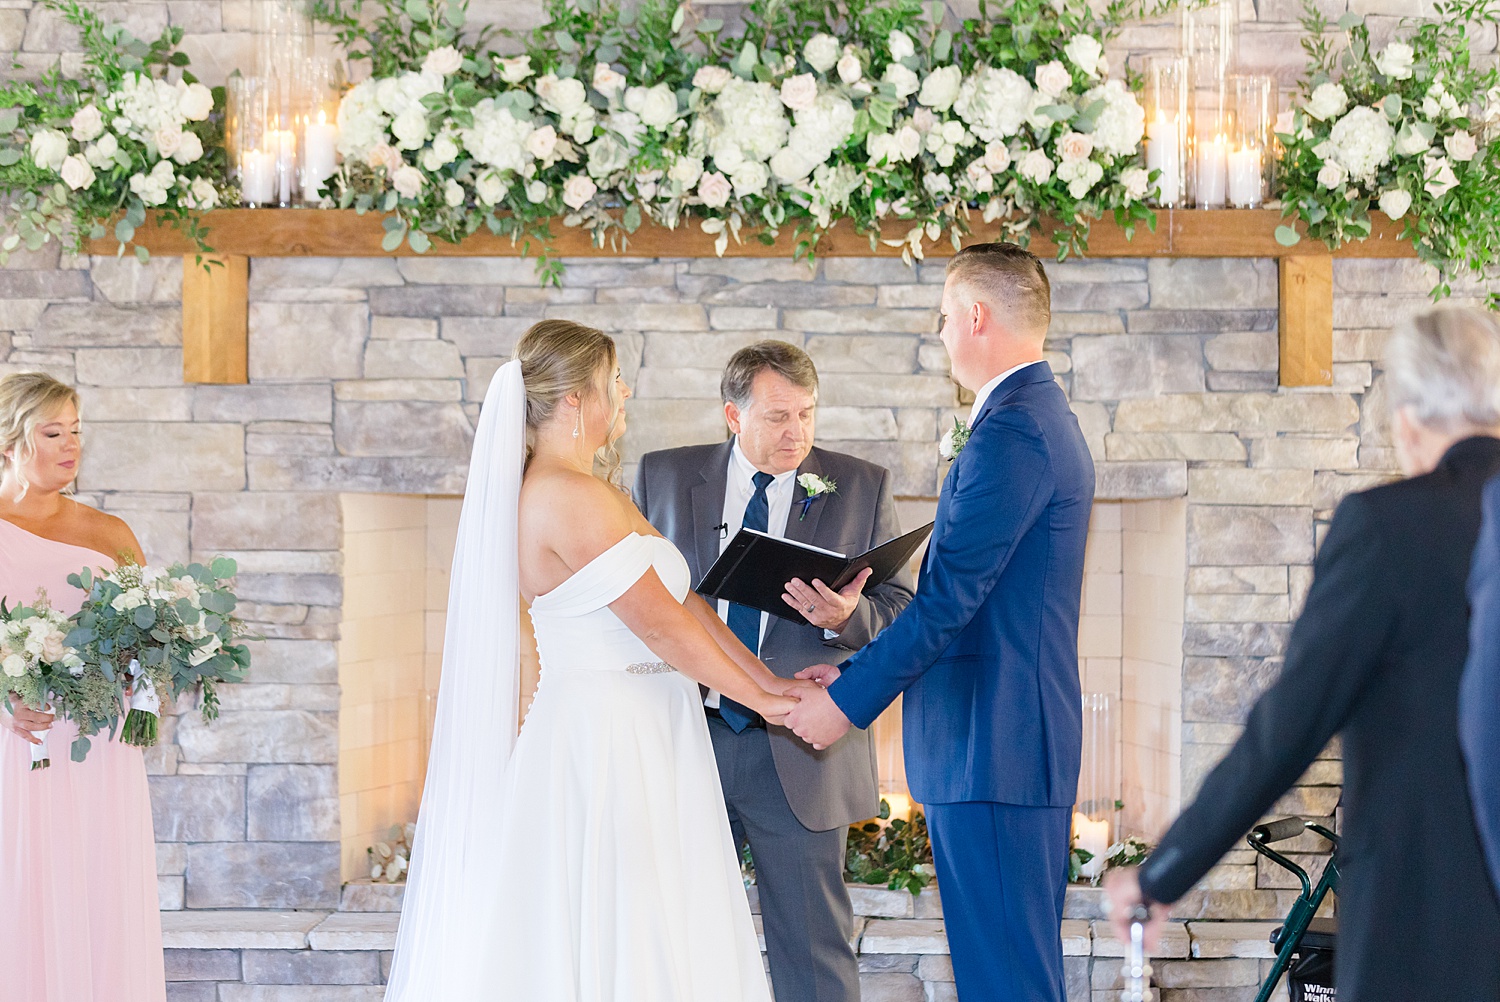 couple exchange vows during indoor wedding ceremony at Mathews Manor